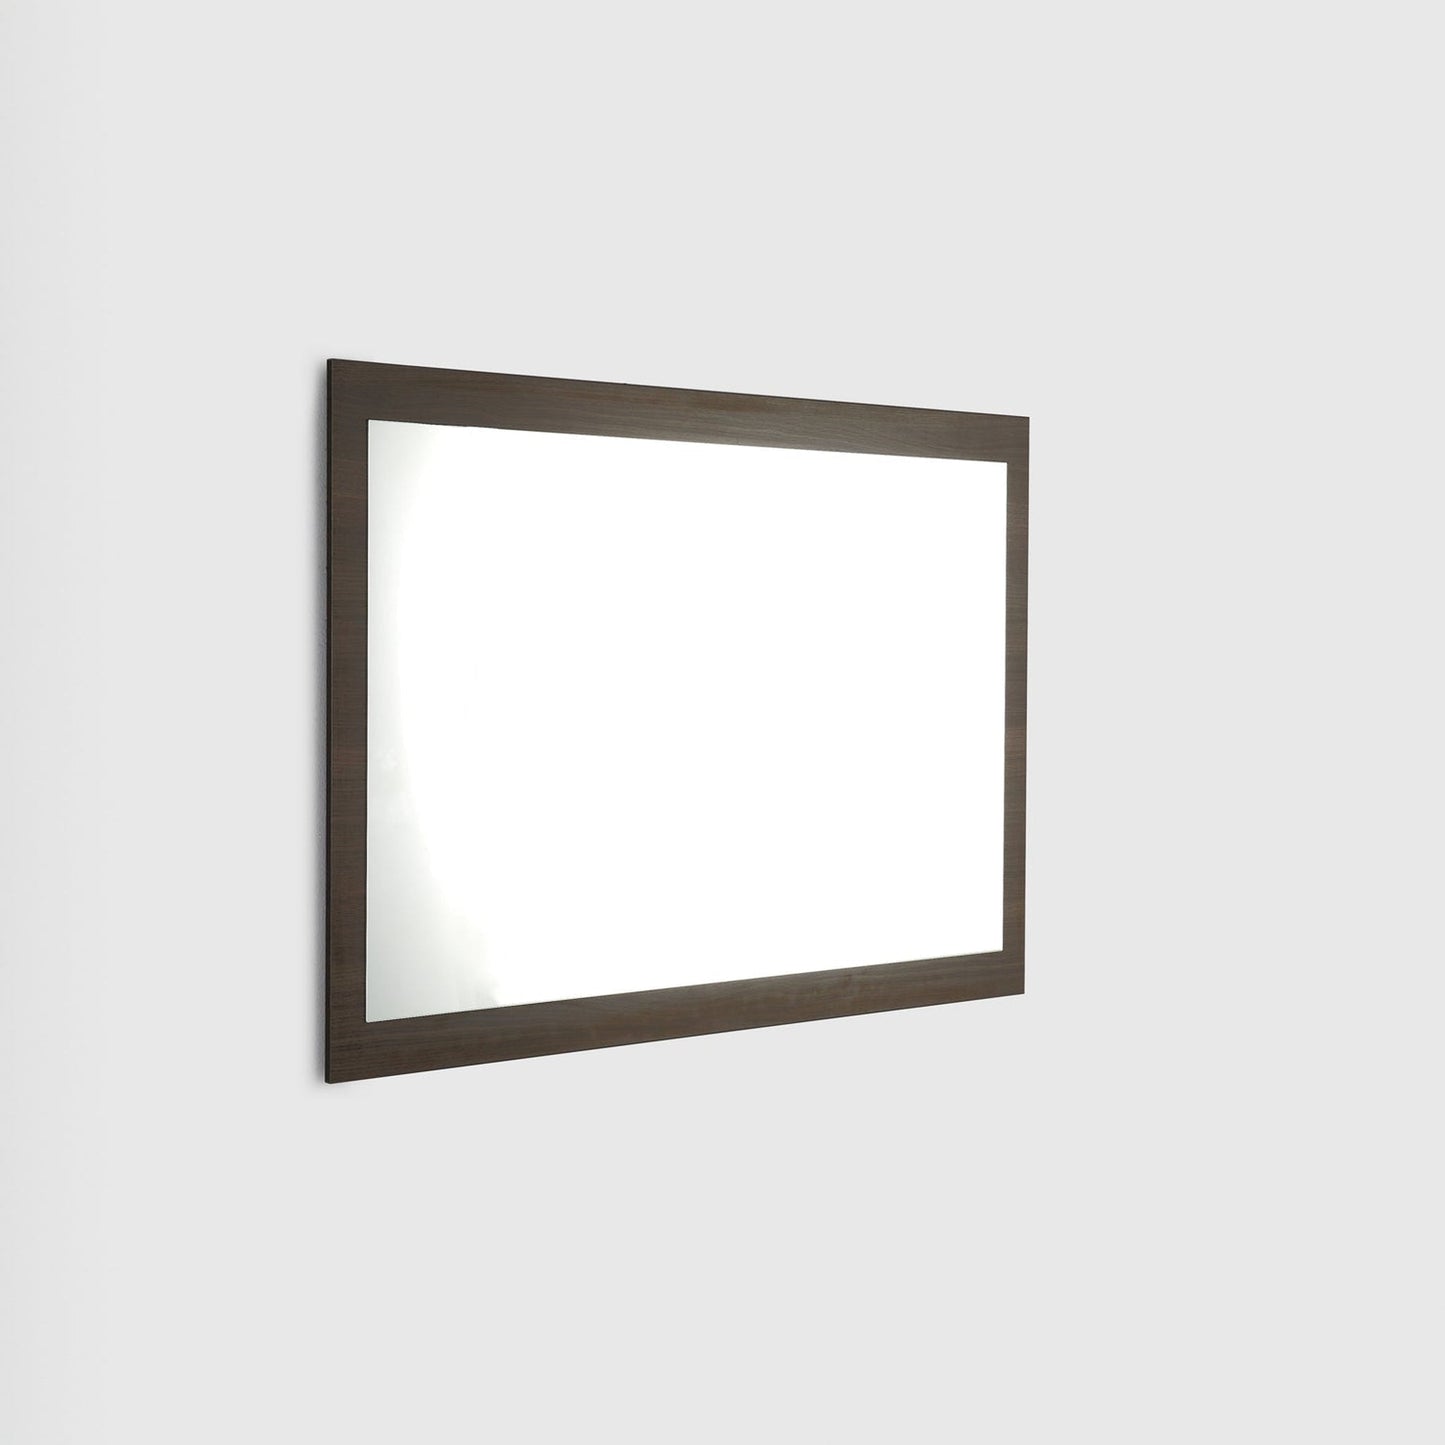 Eviva Sun 48" x 30" Gray Oak Framed Bathroom Wall-Mounted Mirror